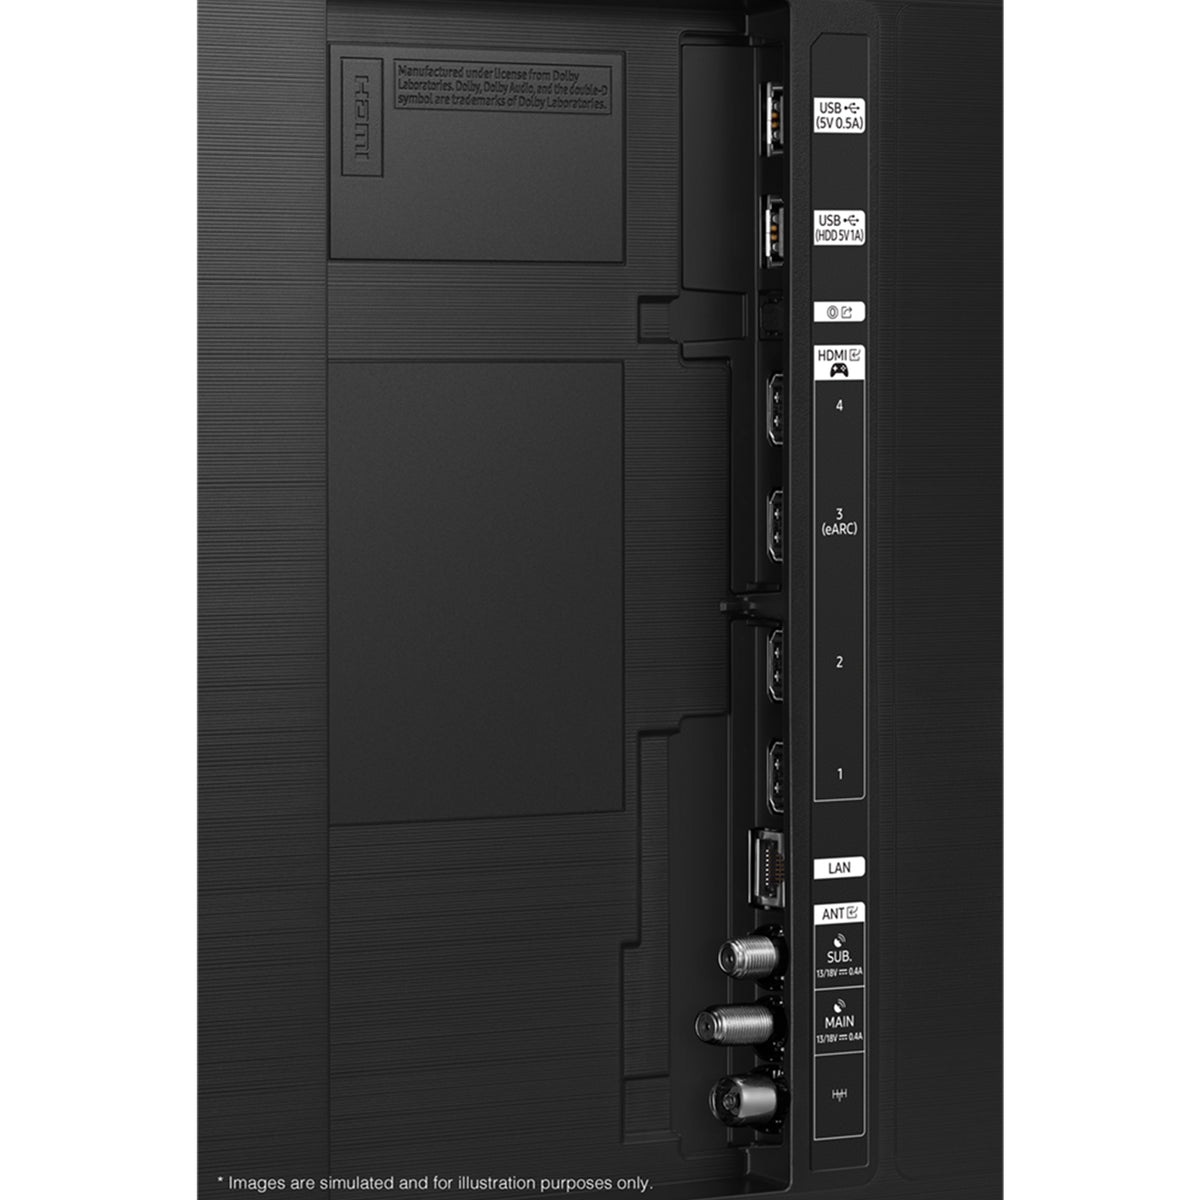 Samsung 65&quot; QN95C Flagship Neo QLED 4K HDR Smart TV - Slate Black | QE65QN95CATXXU from Samsung - DID Electrical